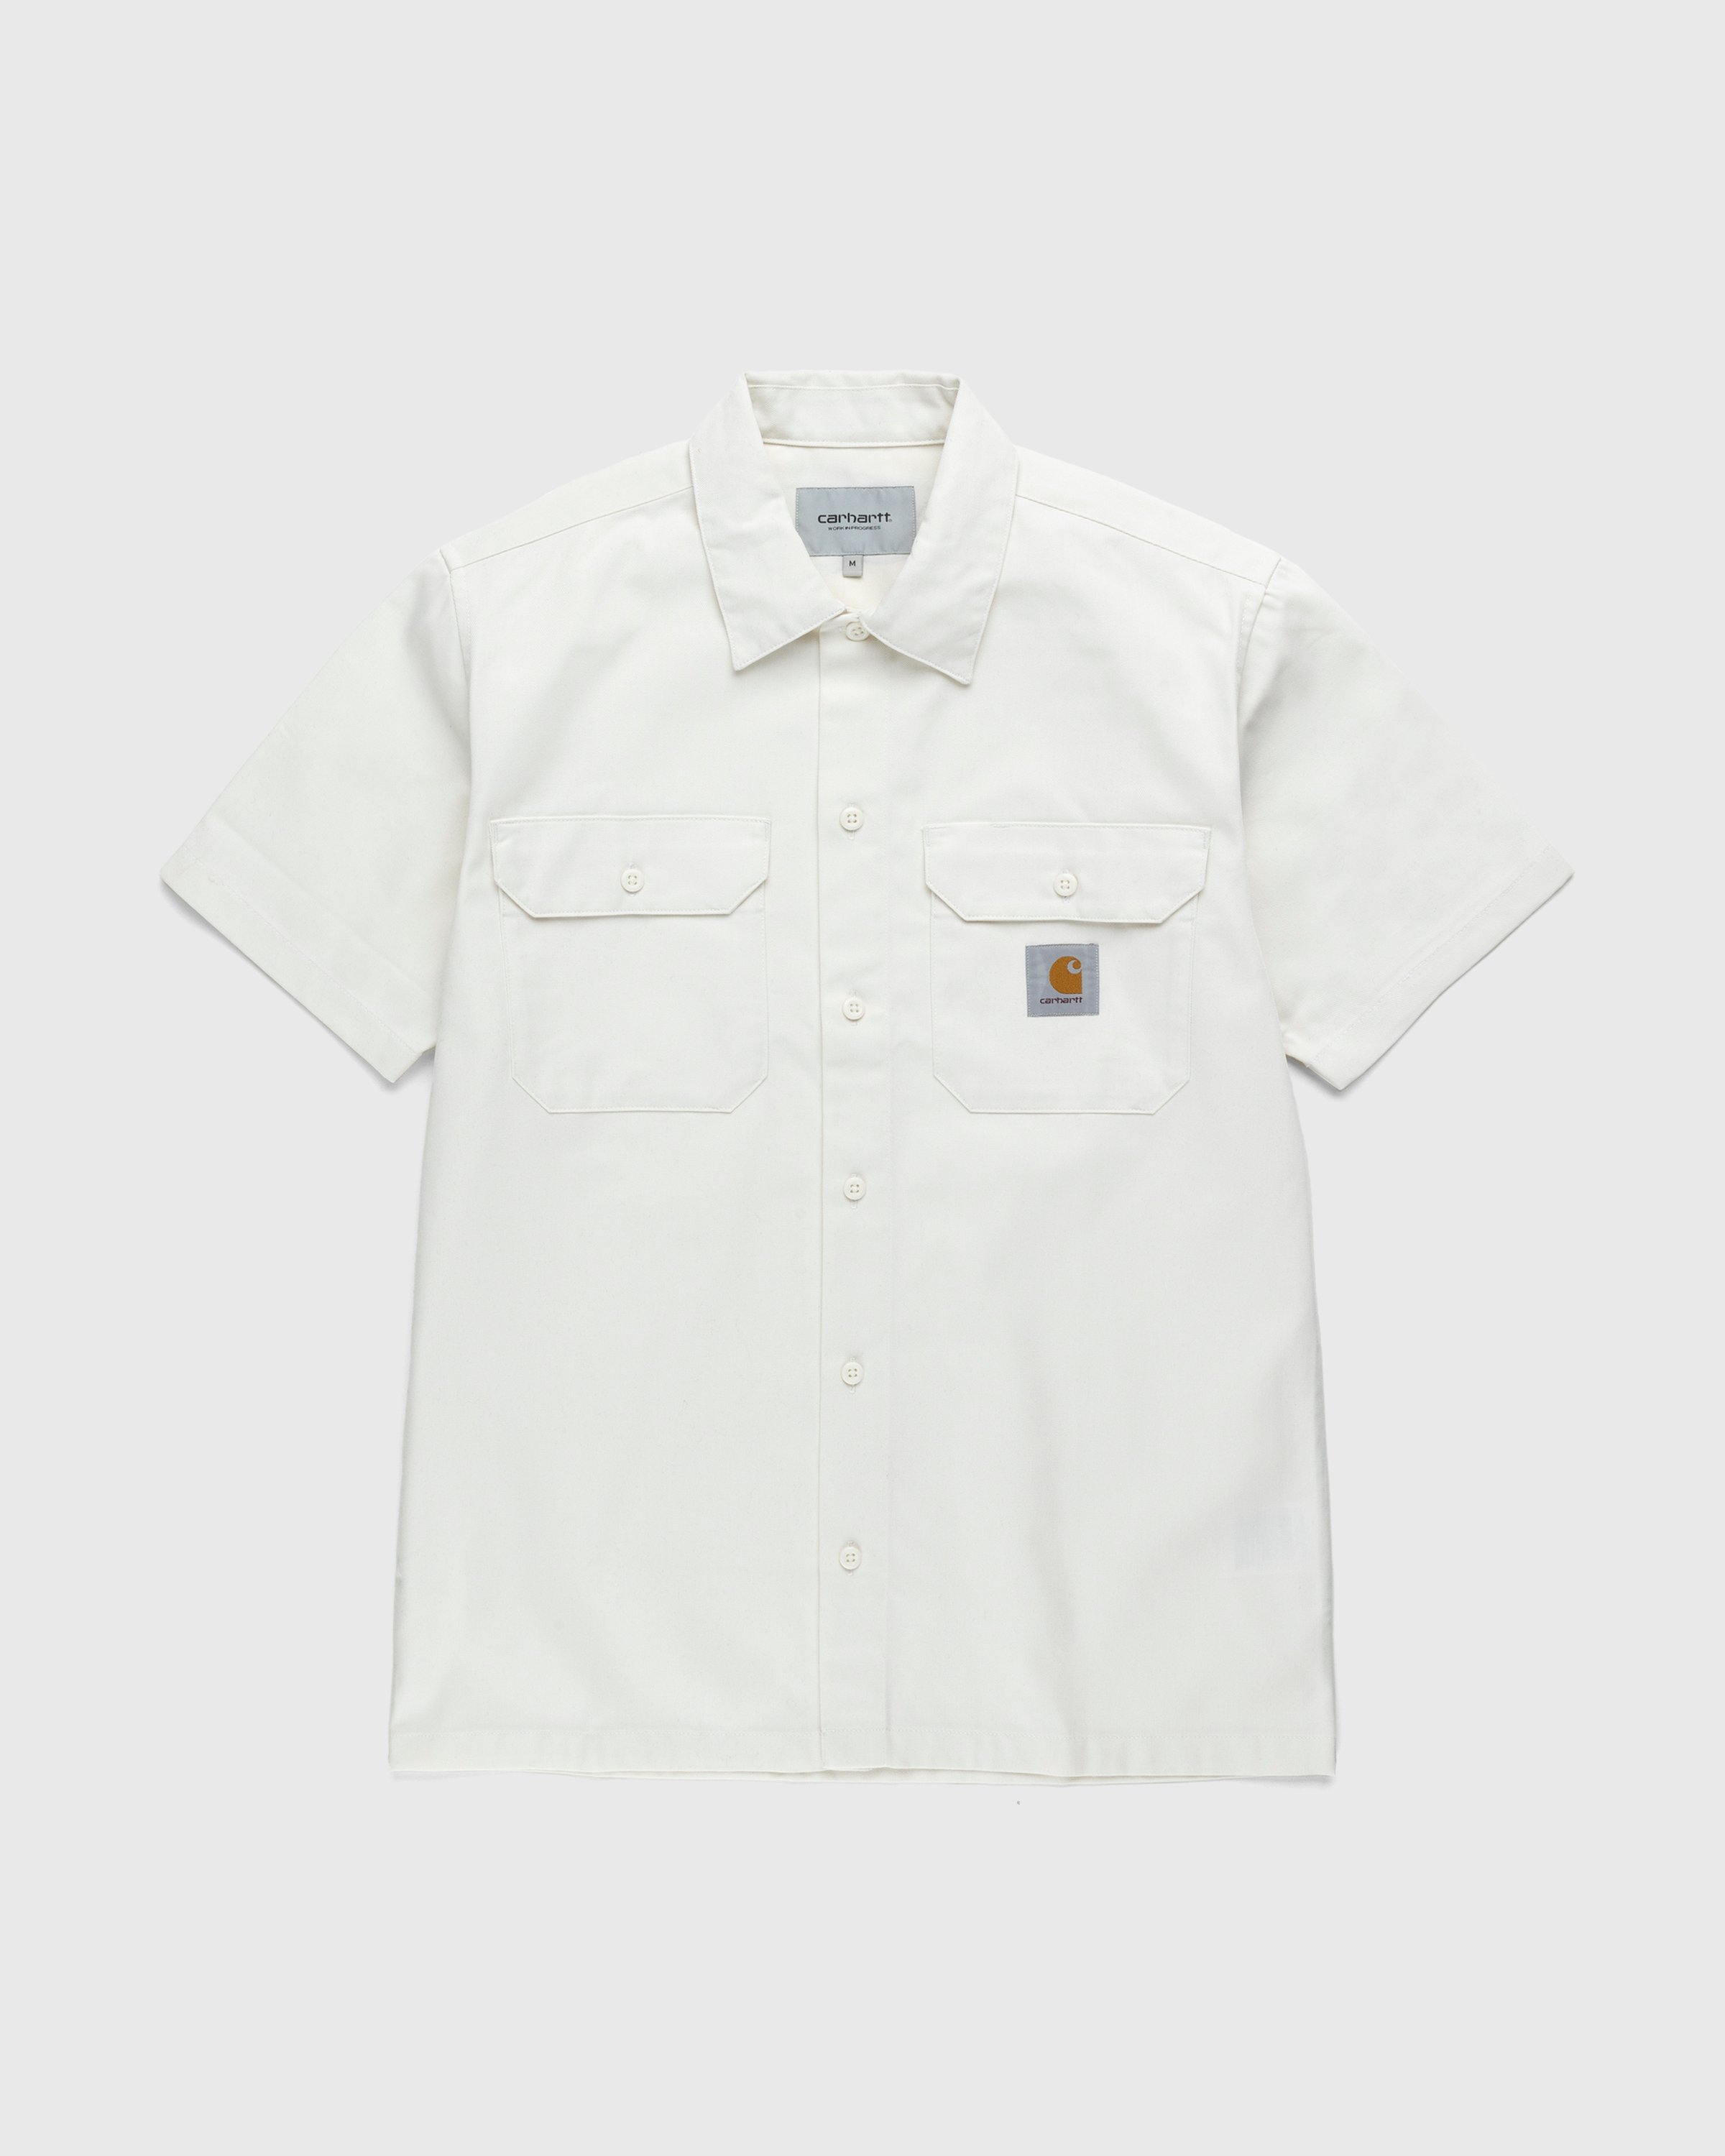 Carhartt WIP - Master Shirt Wax - Clothing - White - Image 1